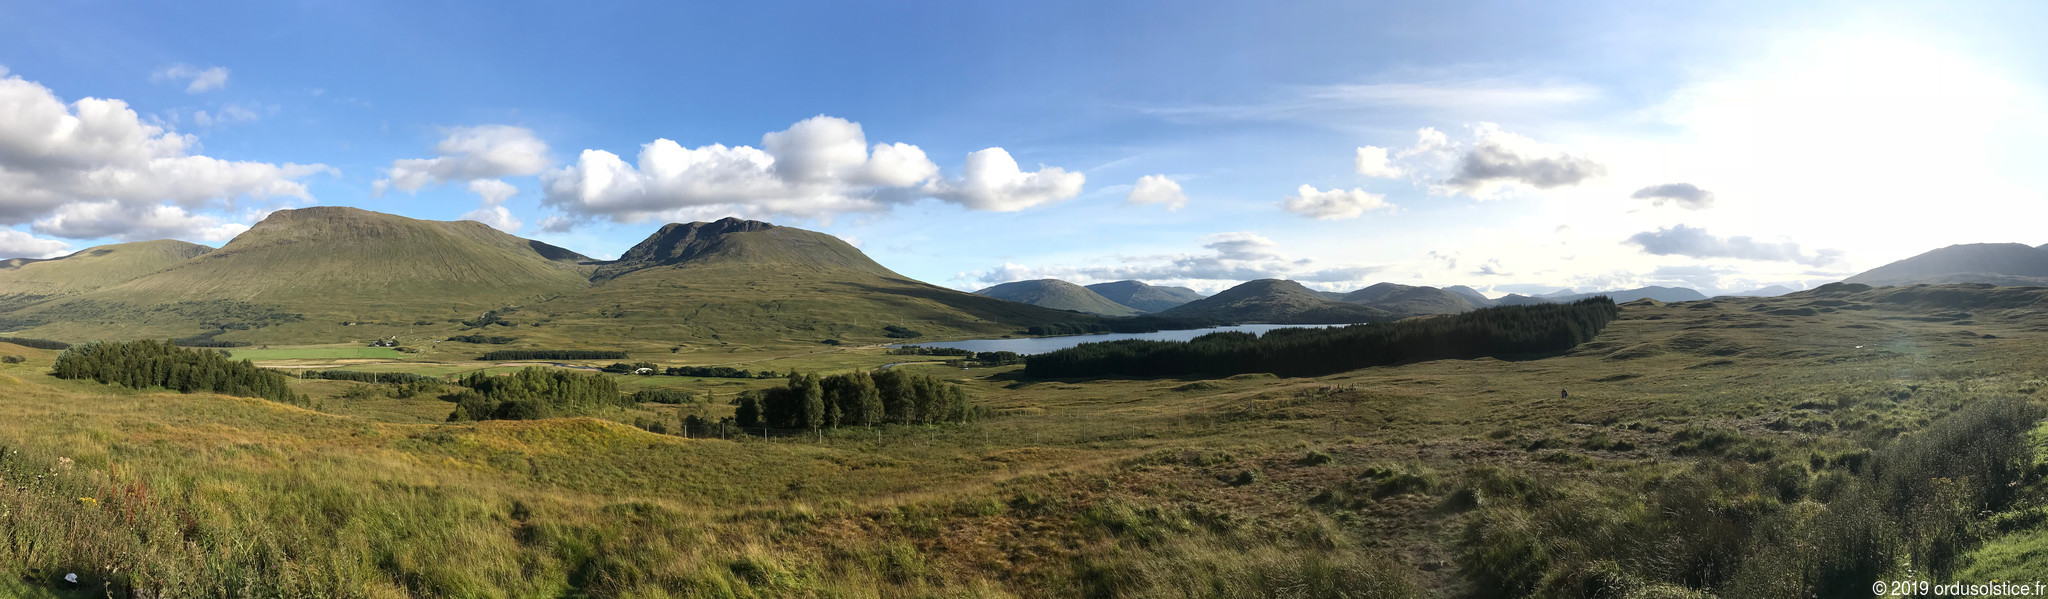 Panorama de Glencoe, Loch et montagnes